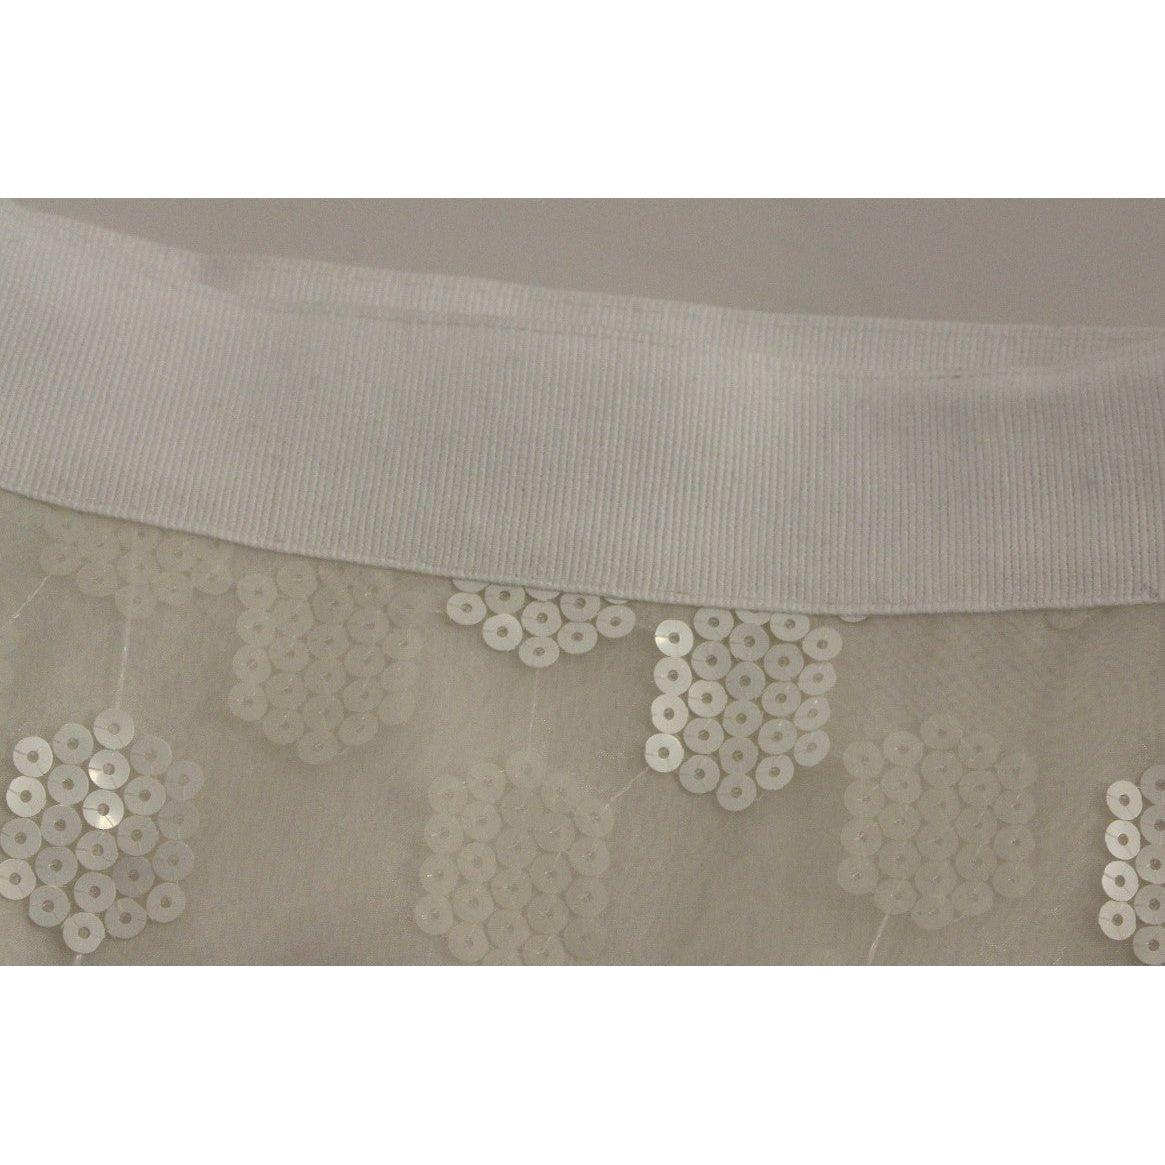 Koonhor Elegant Sequined Pencil Skirt - Pristine White white-sequined-straight-pencil-skirt